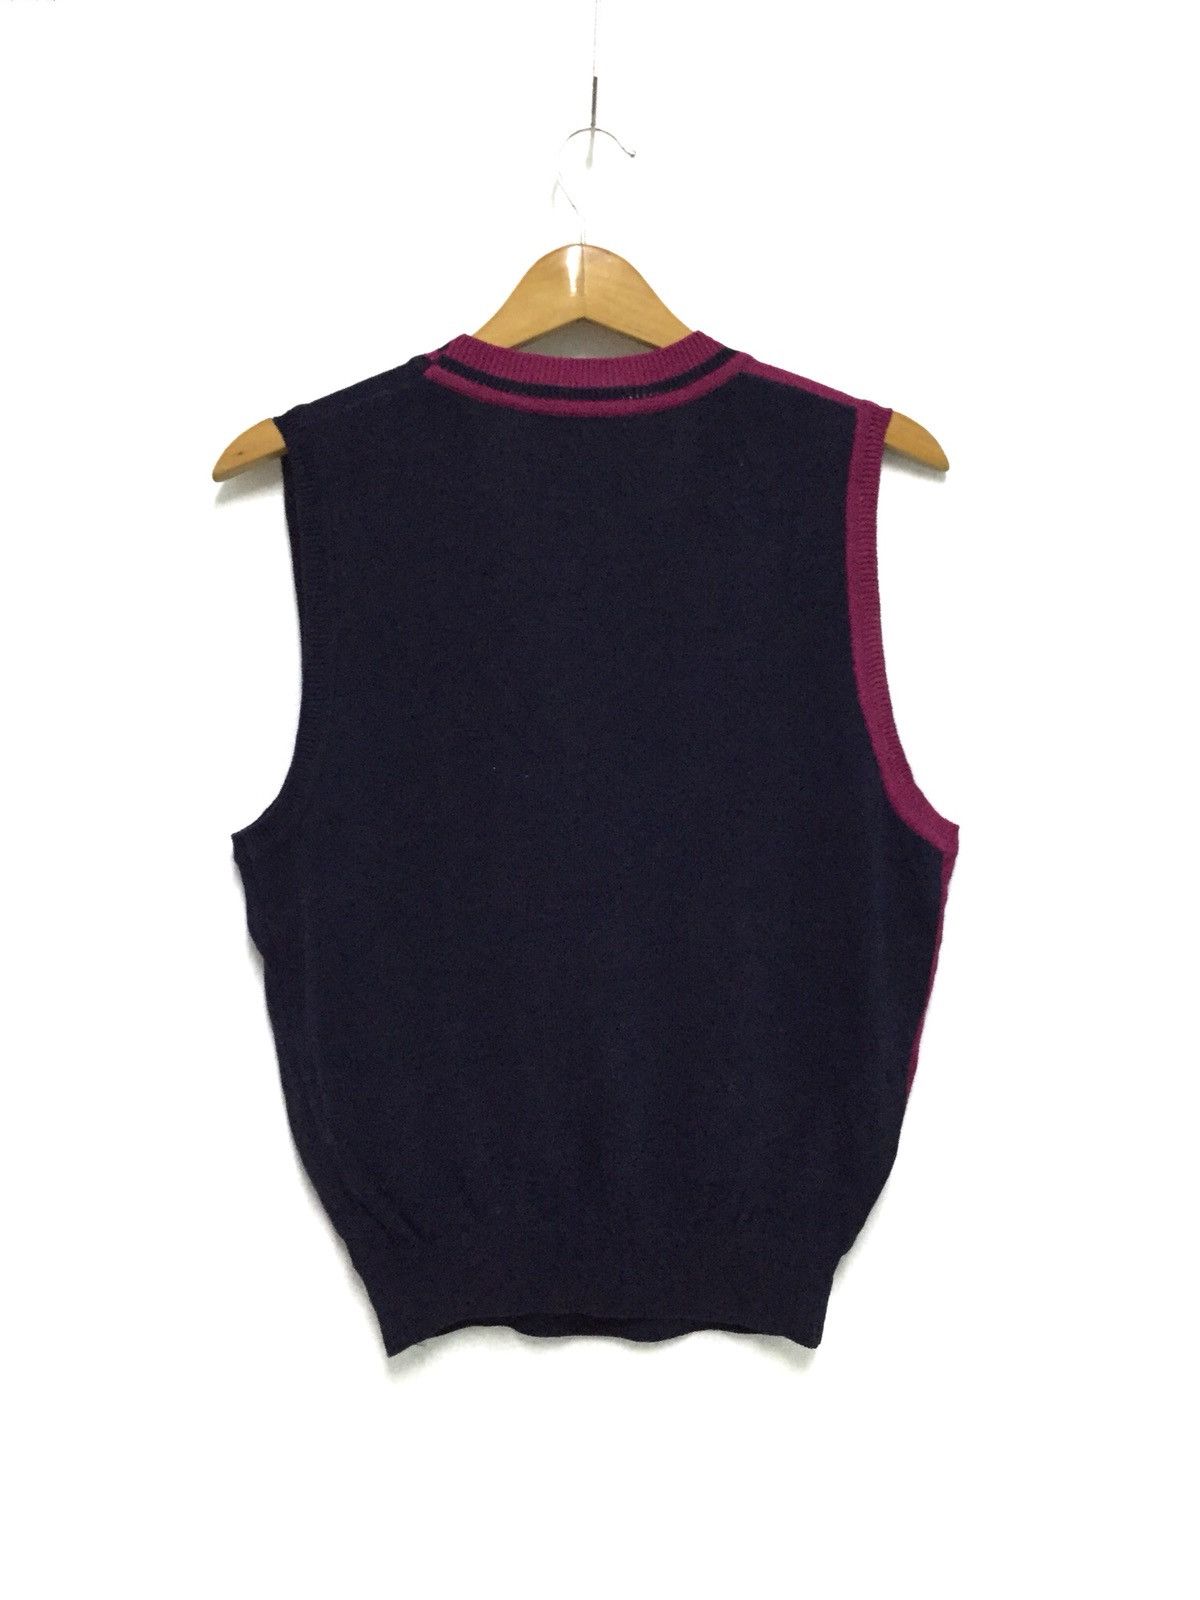 Burberry Burberrys Formal Vest Shirt Spell Out Size US L / EU 52-54 / 3 - 4 Preview